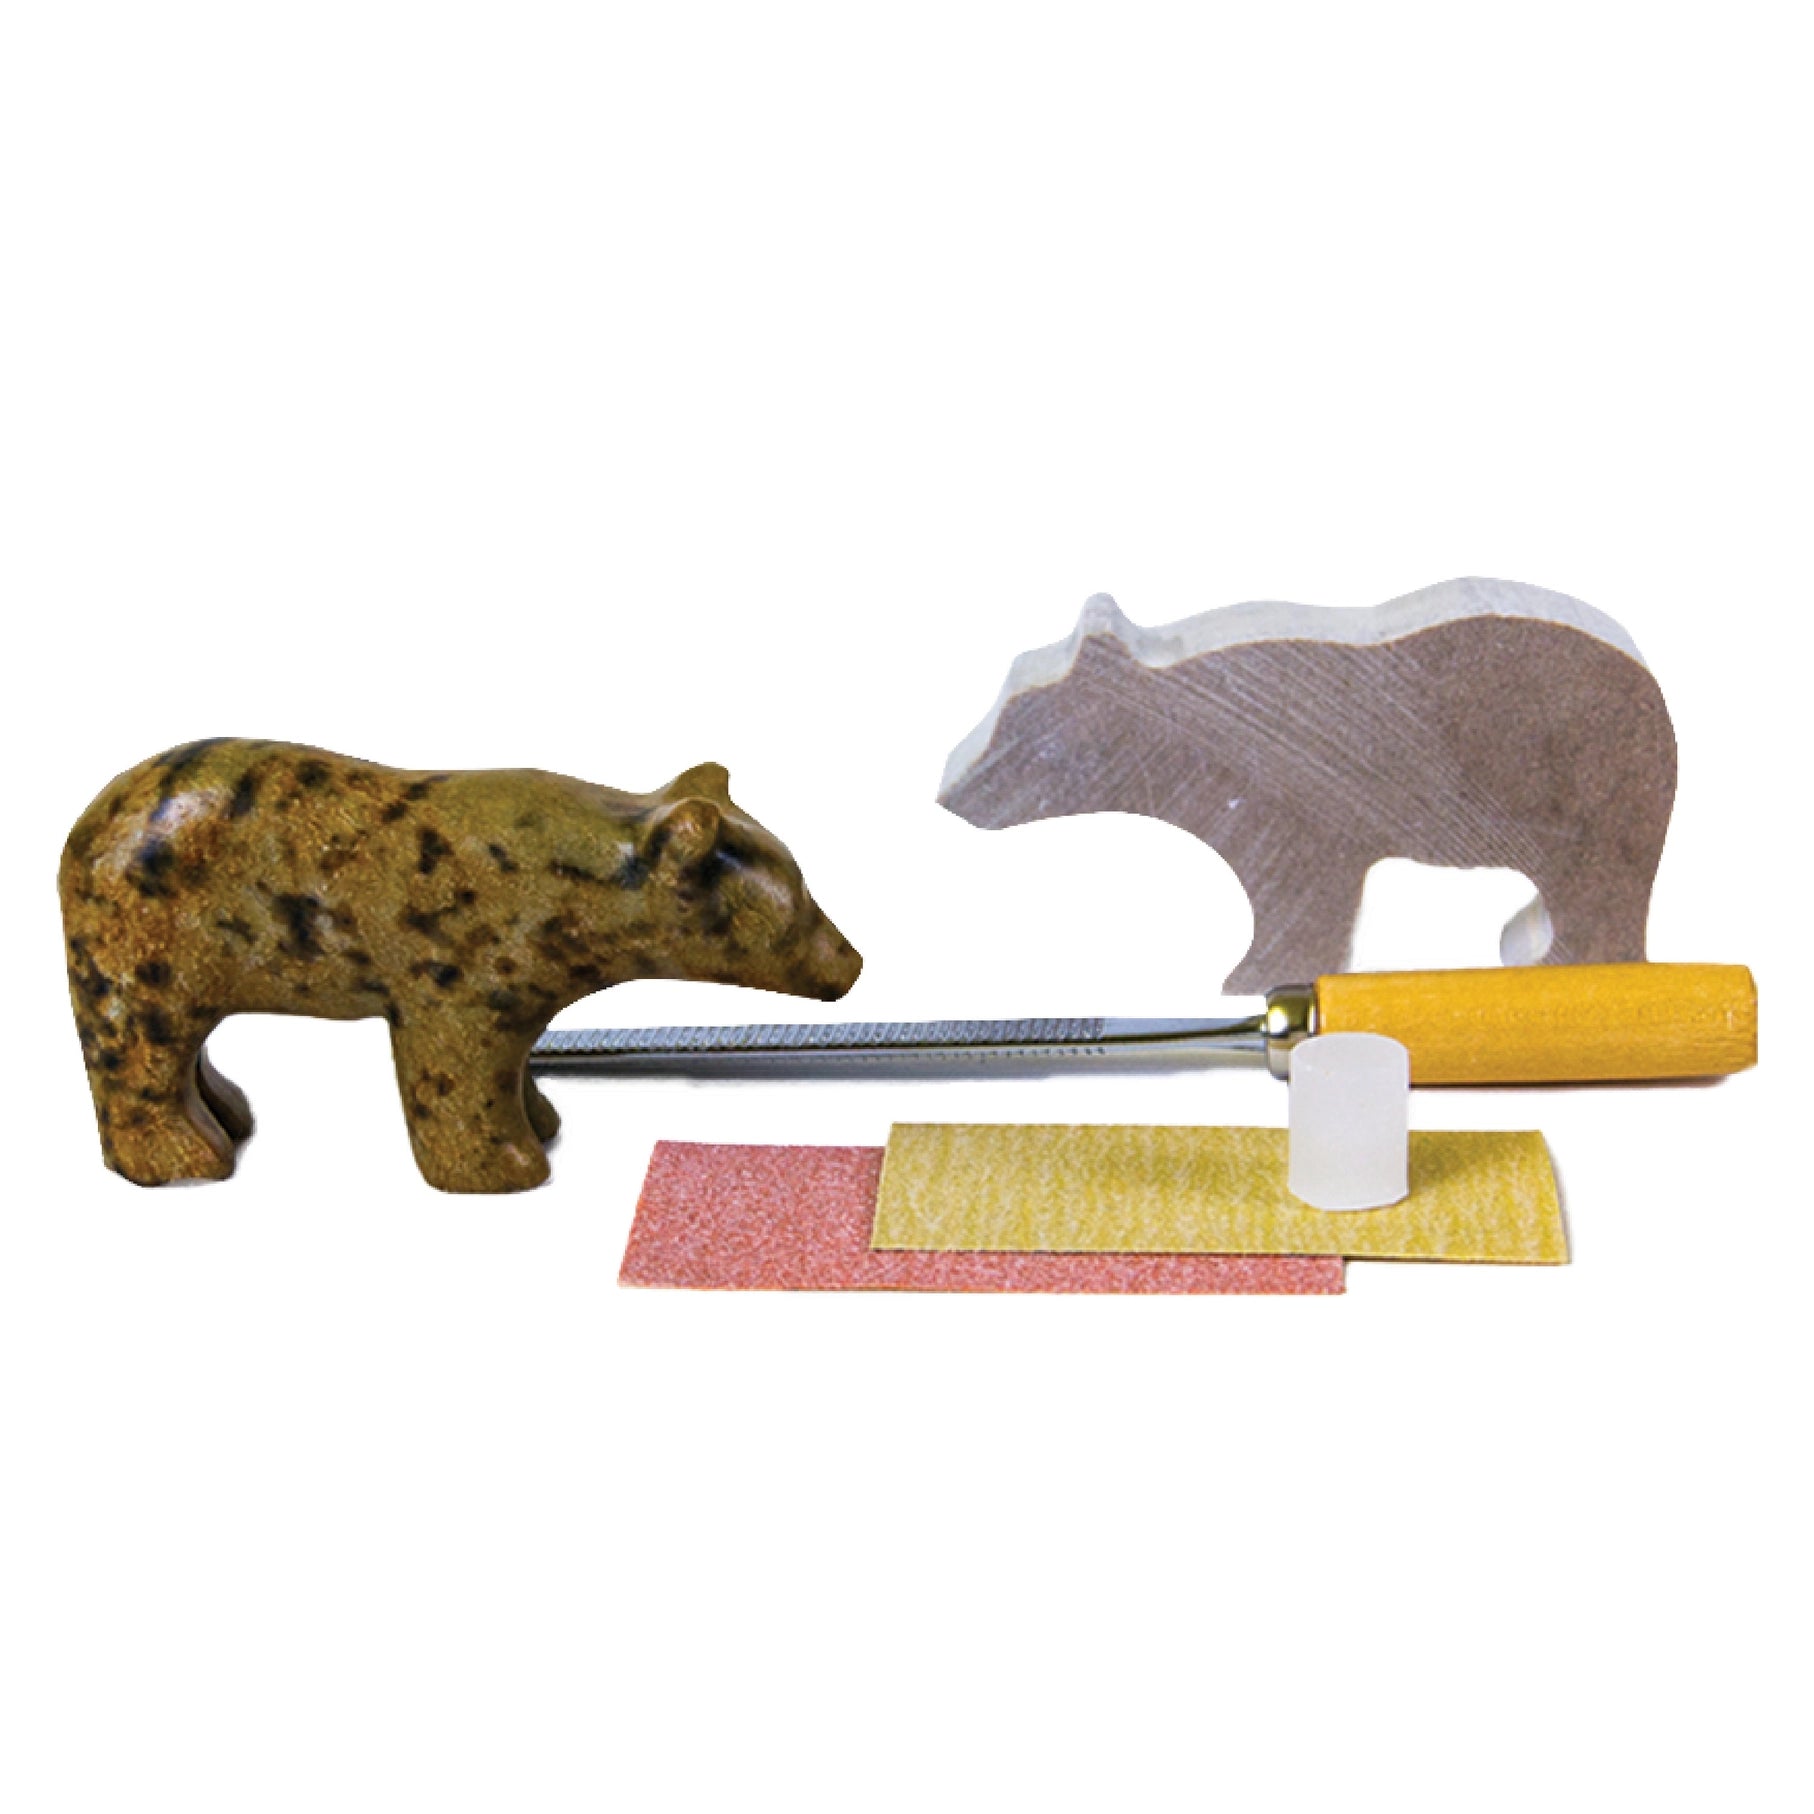 Bear soapstone carving kit